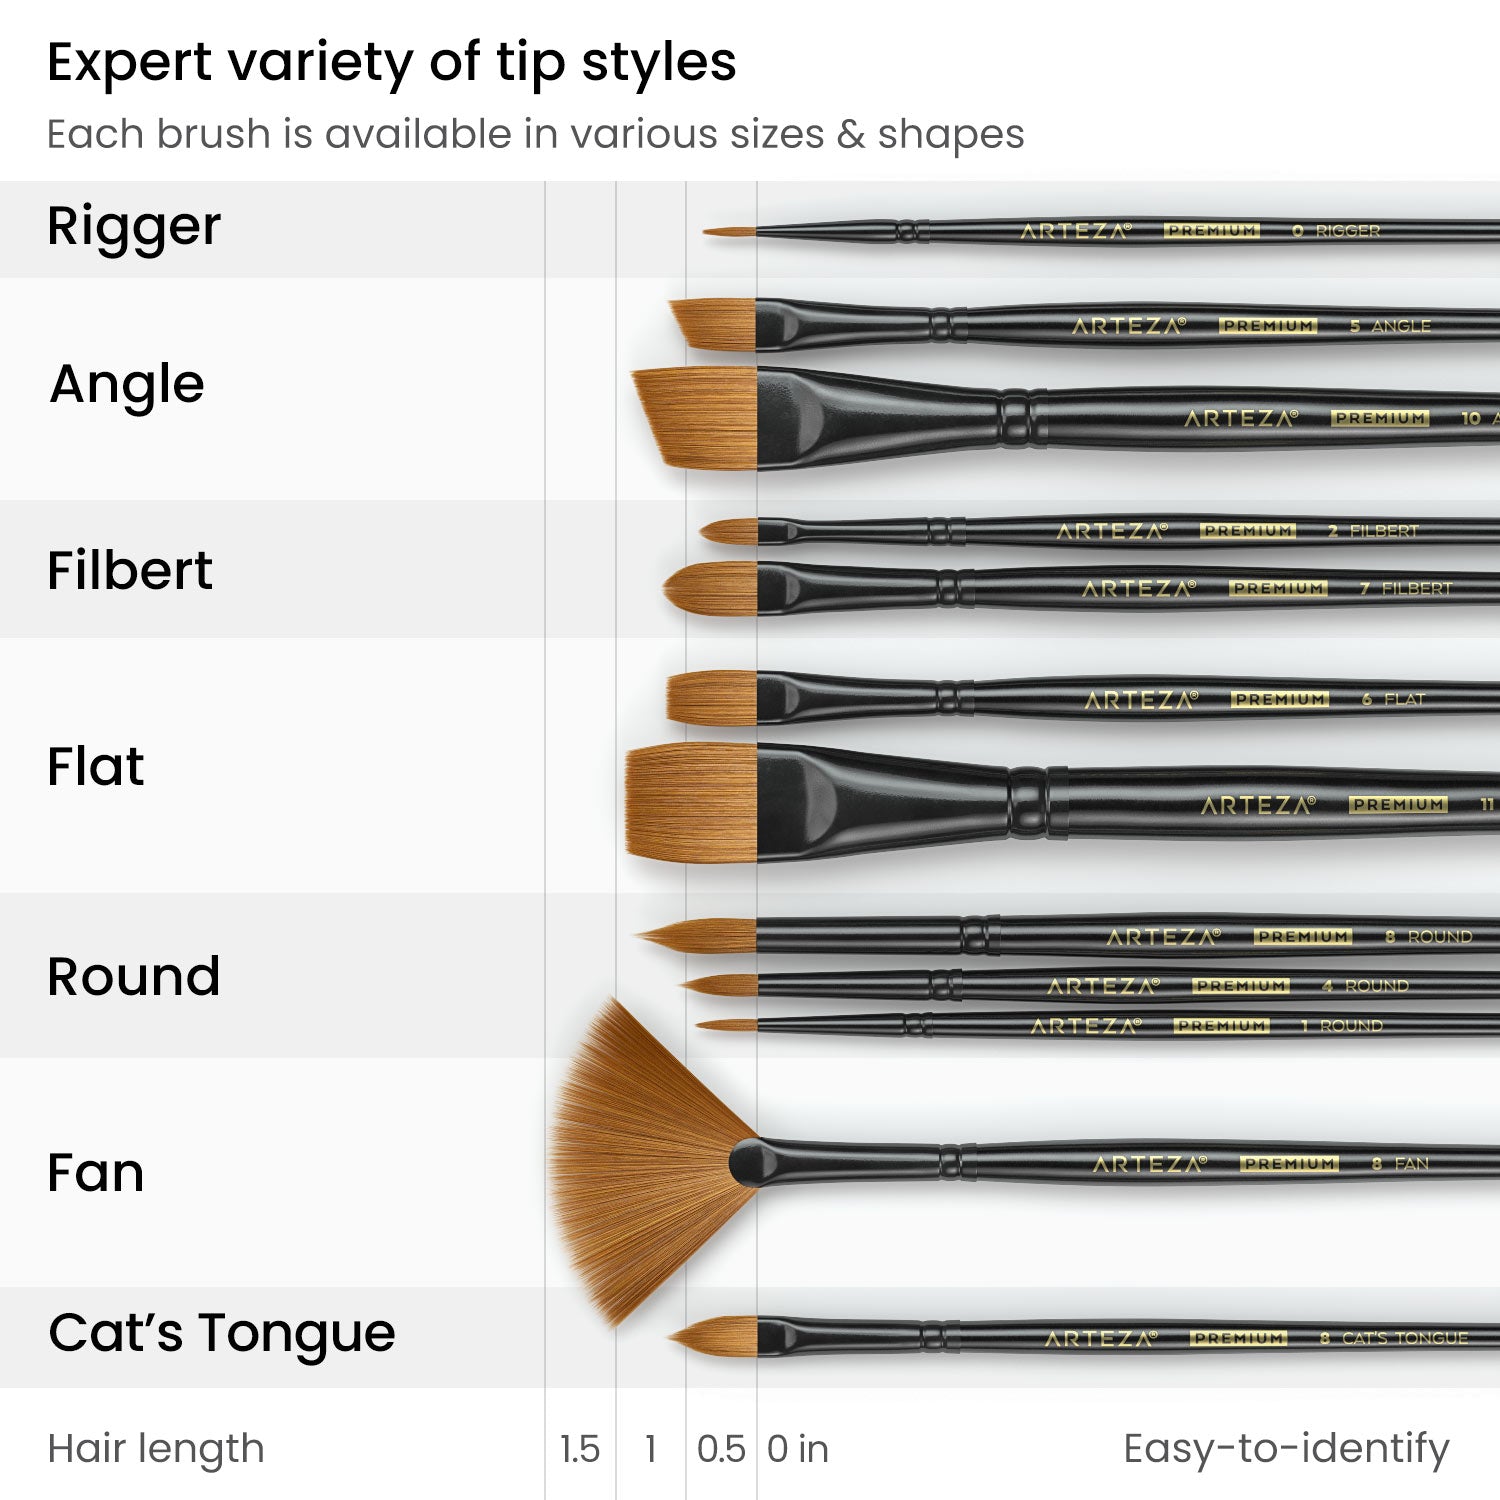 The 5 Best Makeup Brush Sets